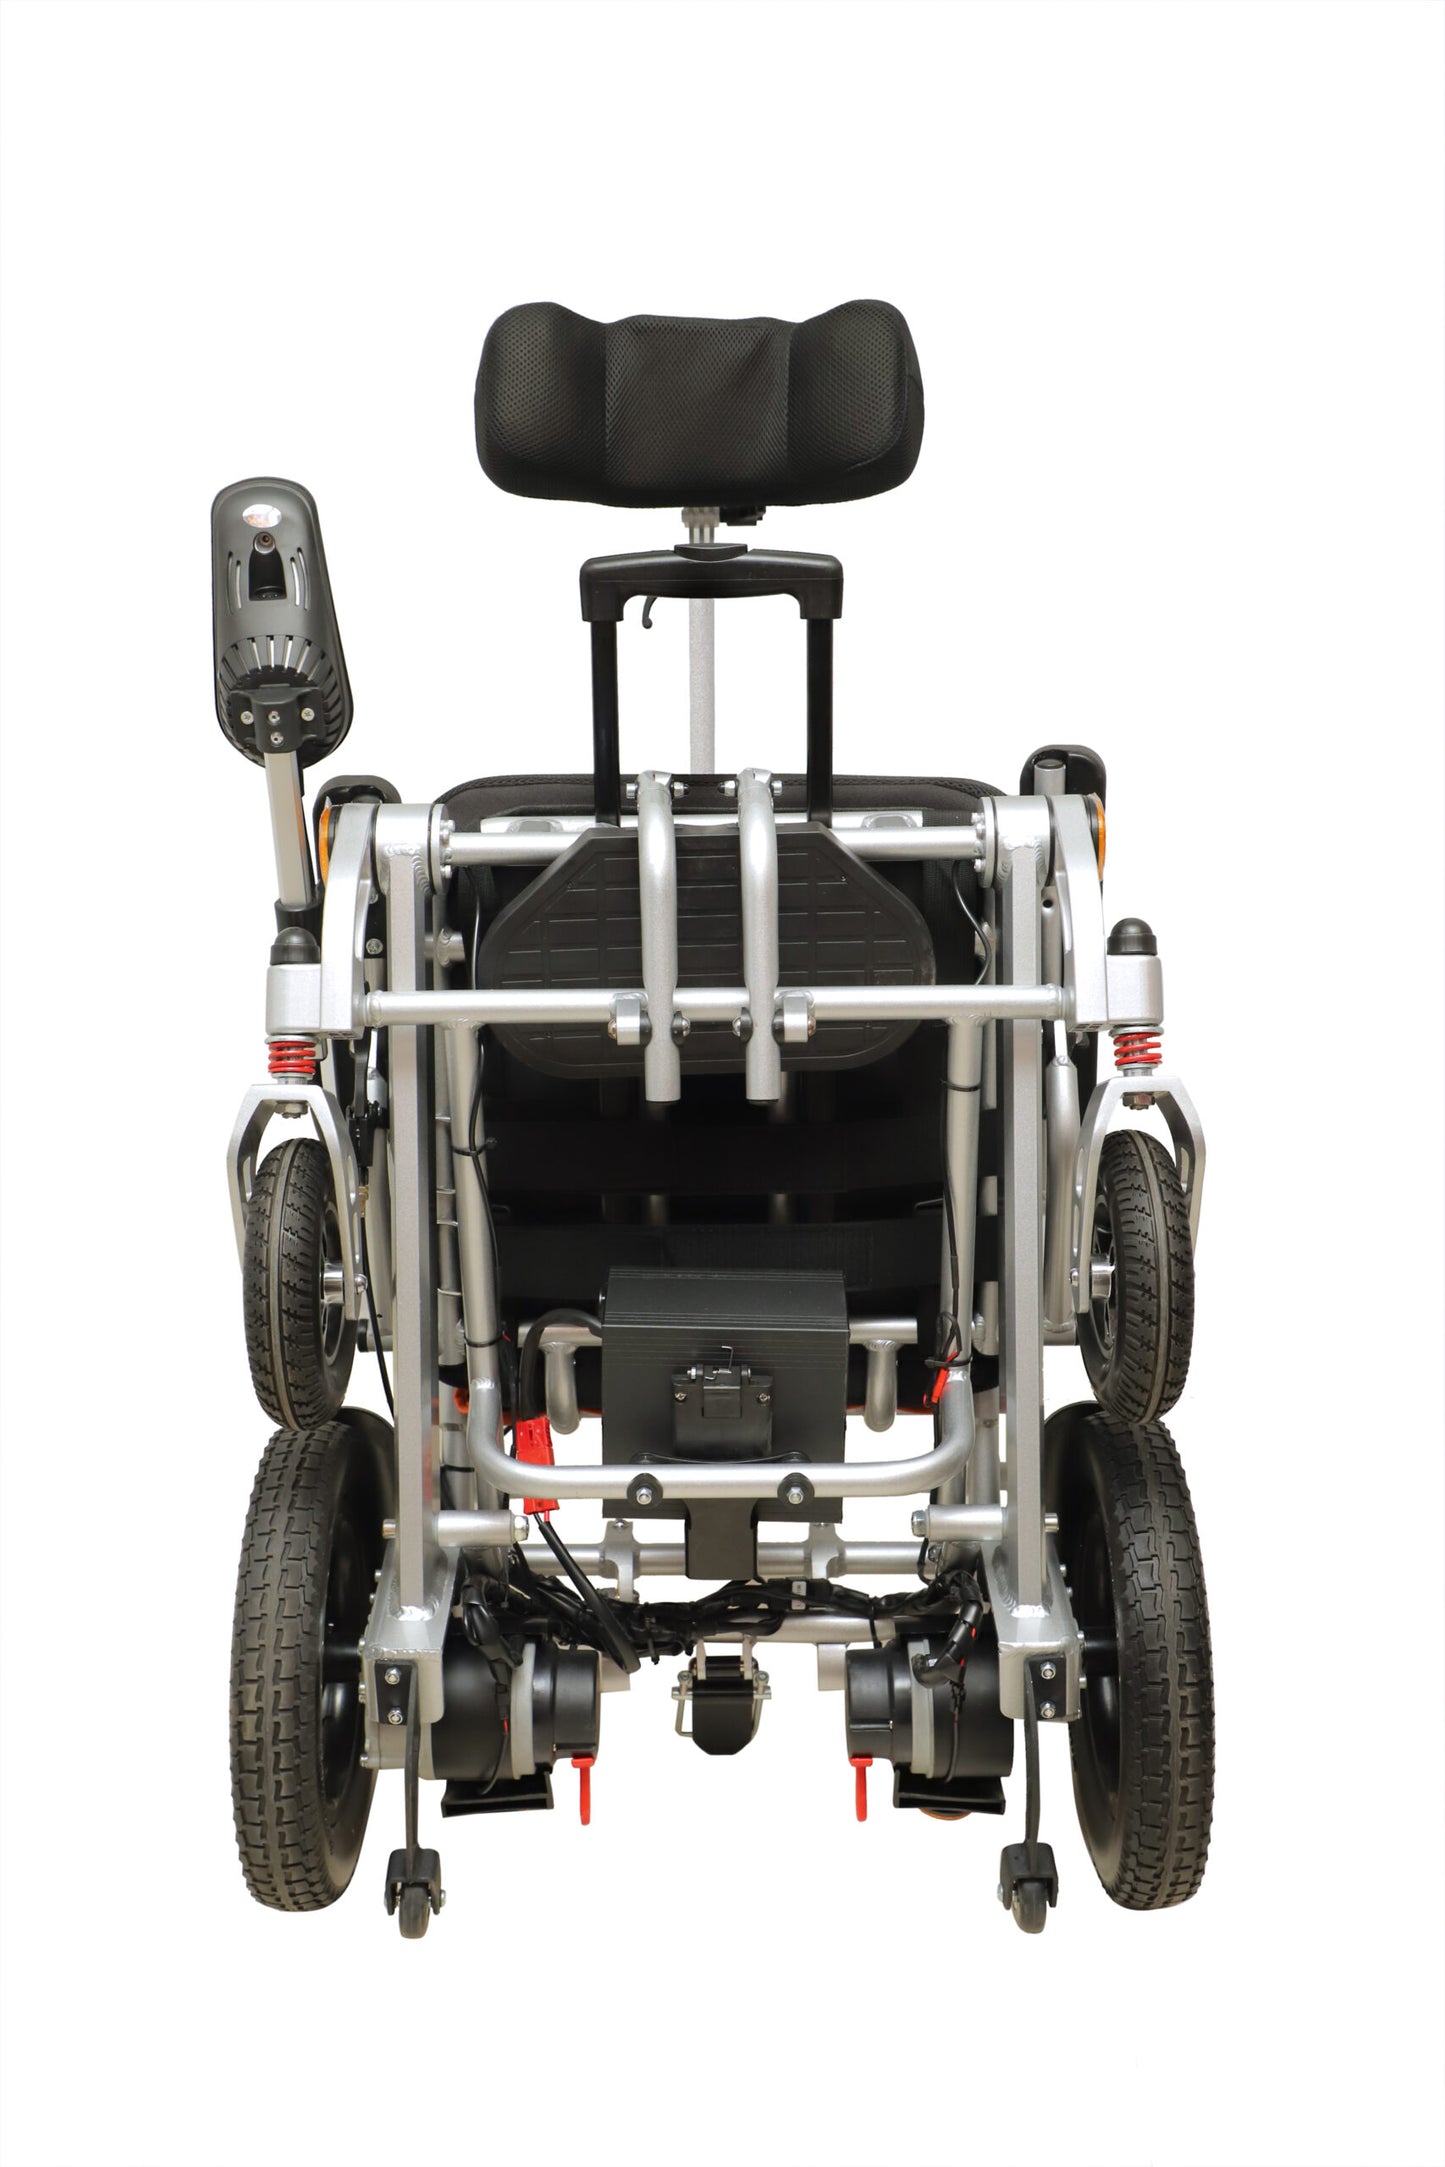 Esleh Super Plus Electric Wheelchair - Cure Clouds Power wheelchair CureClouds